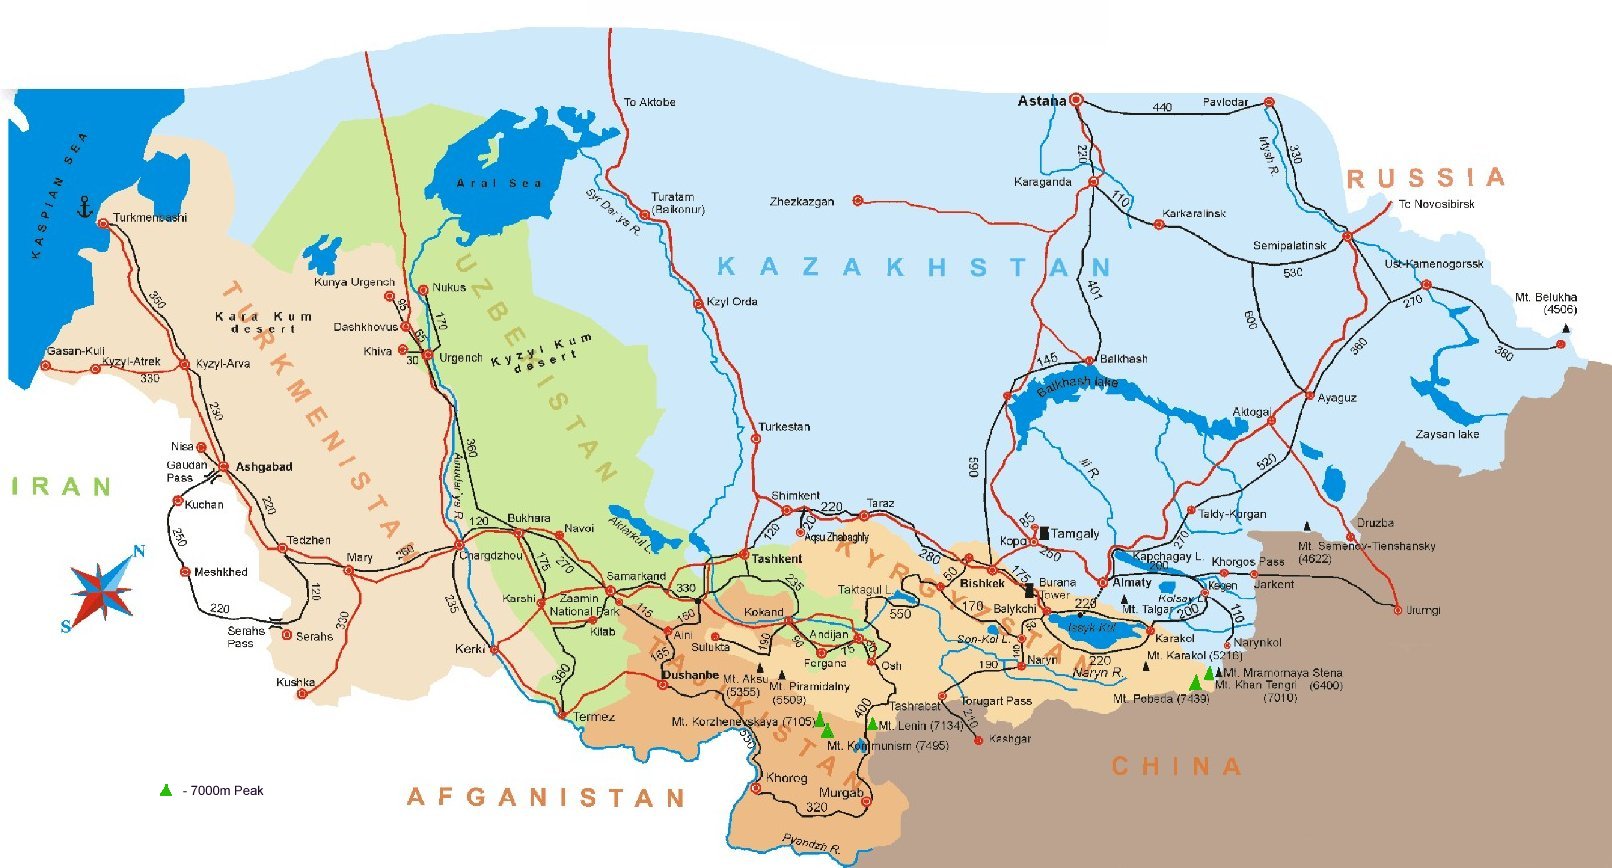 Map of Central Asia - Tadjikistan, Kyrgyzstan, Uzbekhistan, Kazakhstan, Turkmenistan